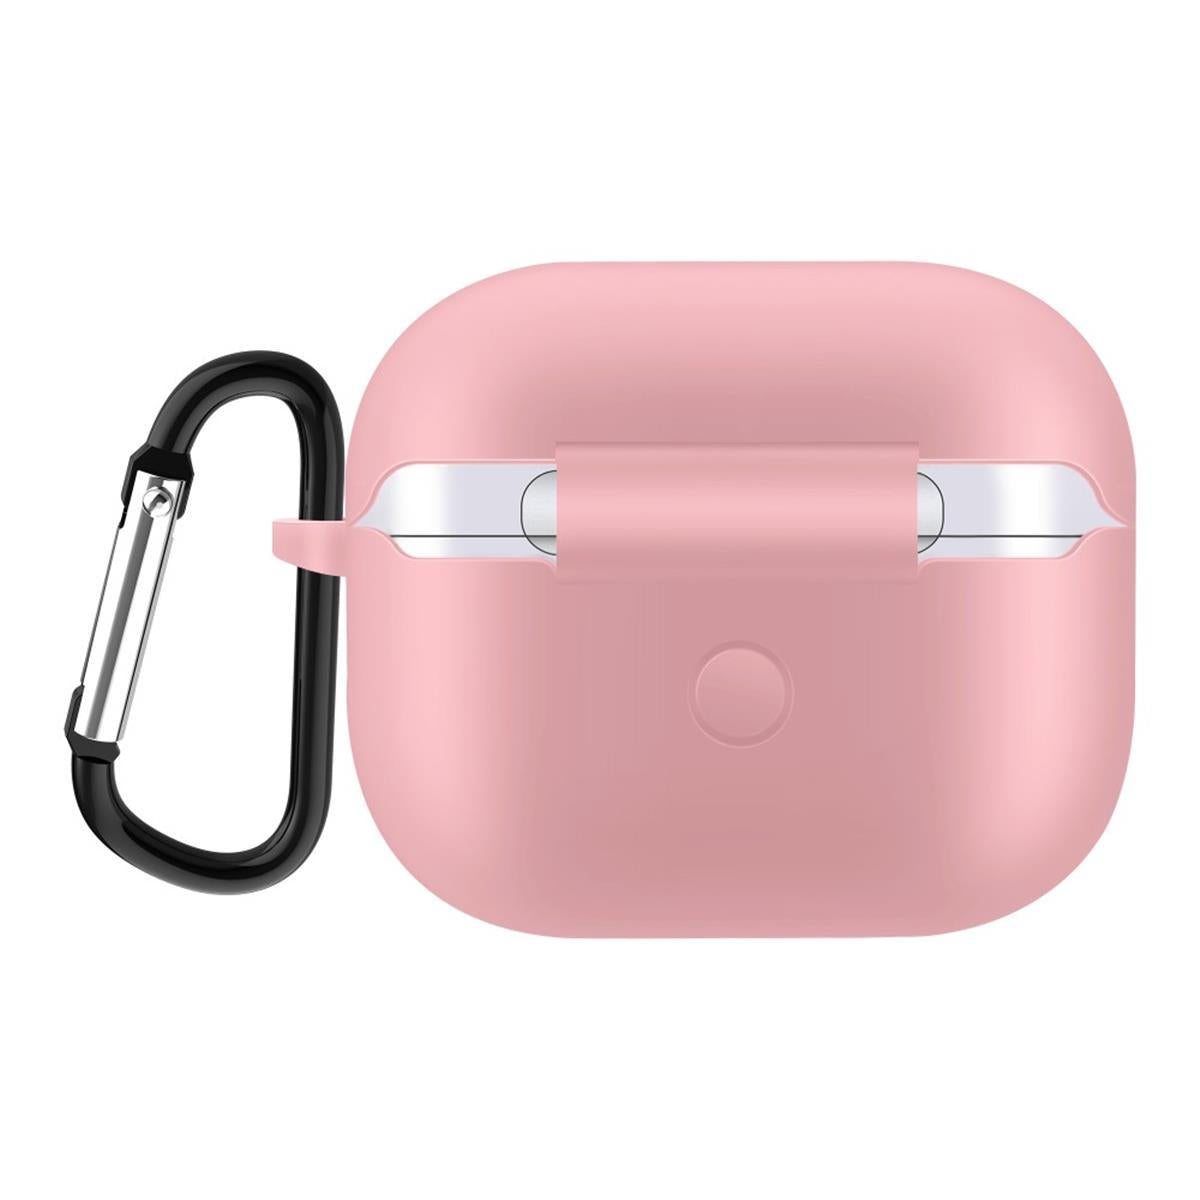 Hülle für Apple AirPods 3 Silikon Case Cover Etui Bumper Schutzhülle Tasche Rosa